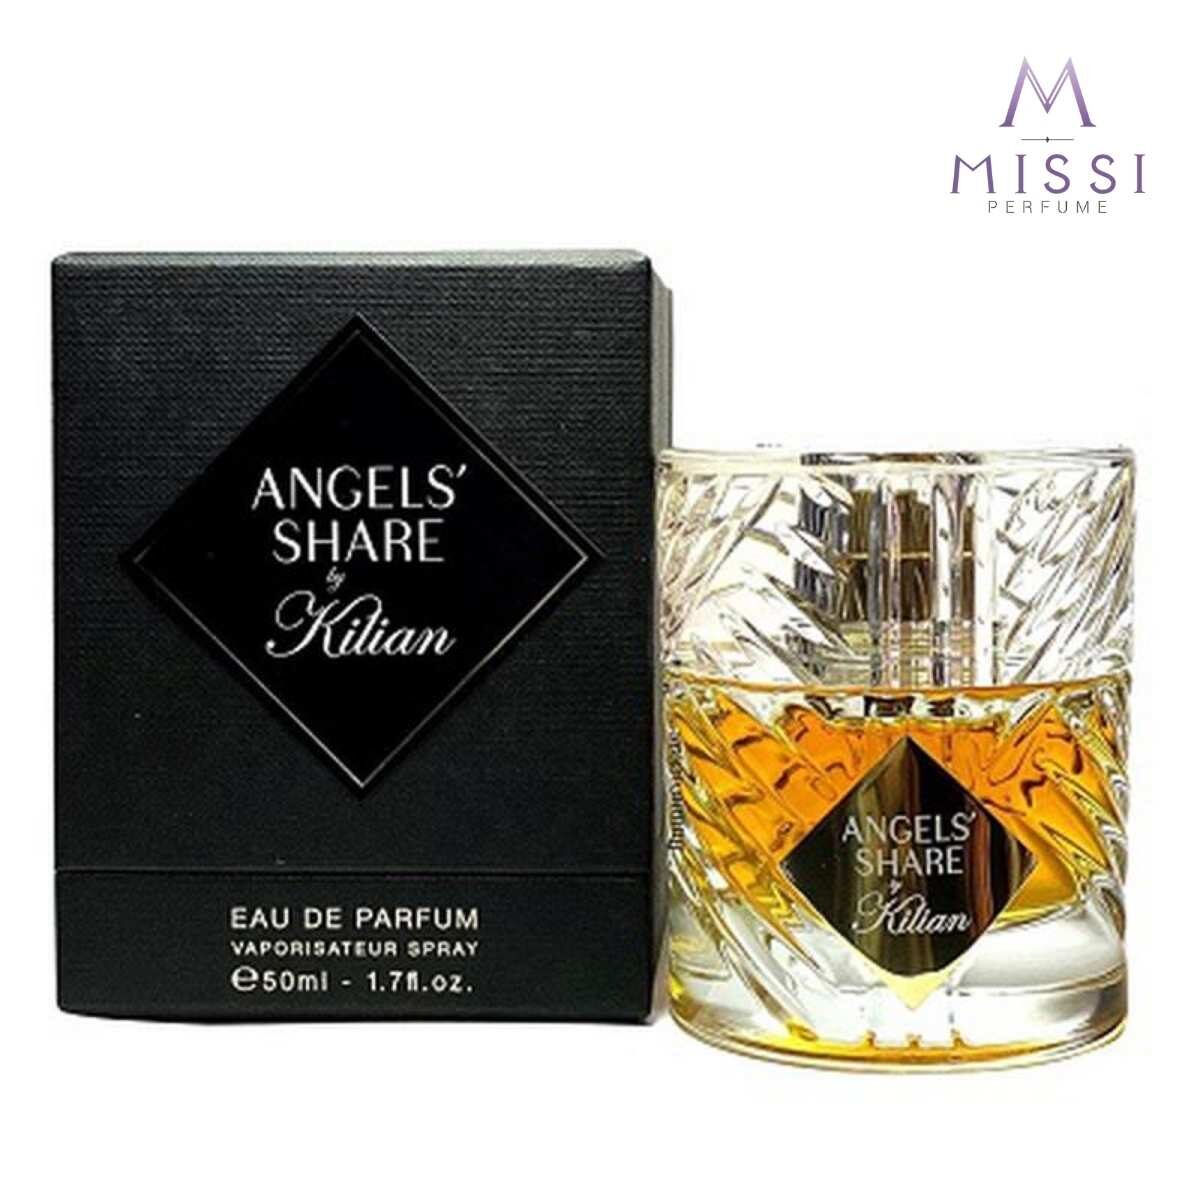 Angels 'share By Kilian Missi Perfume